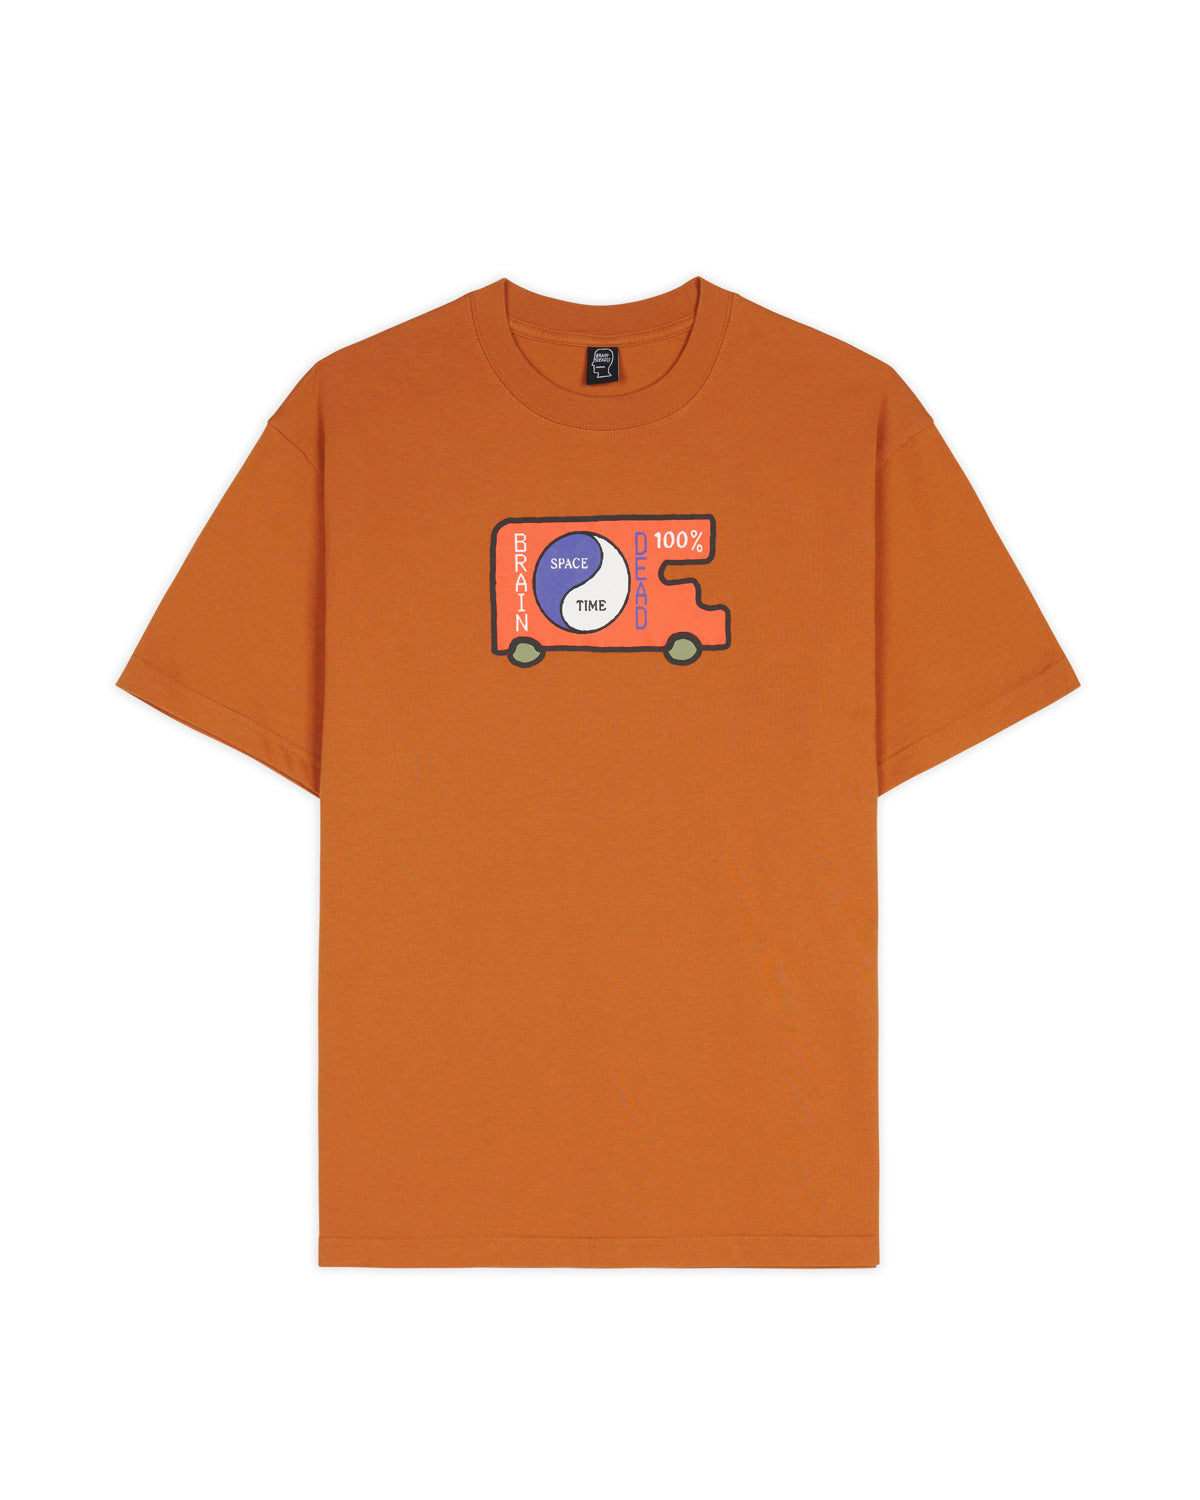 Space/Time T-Shirt - Nutmeg 1